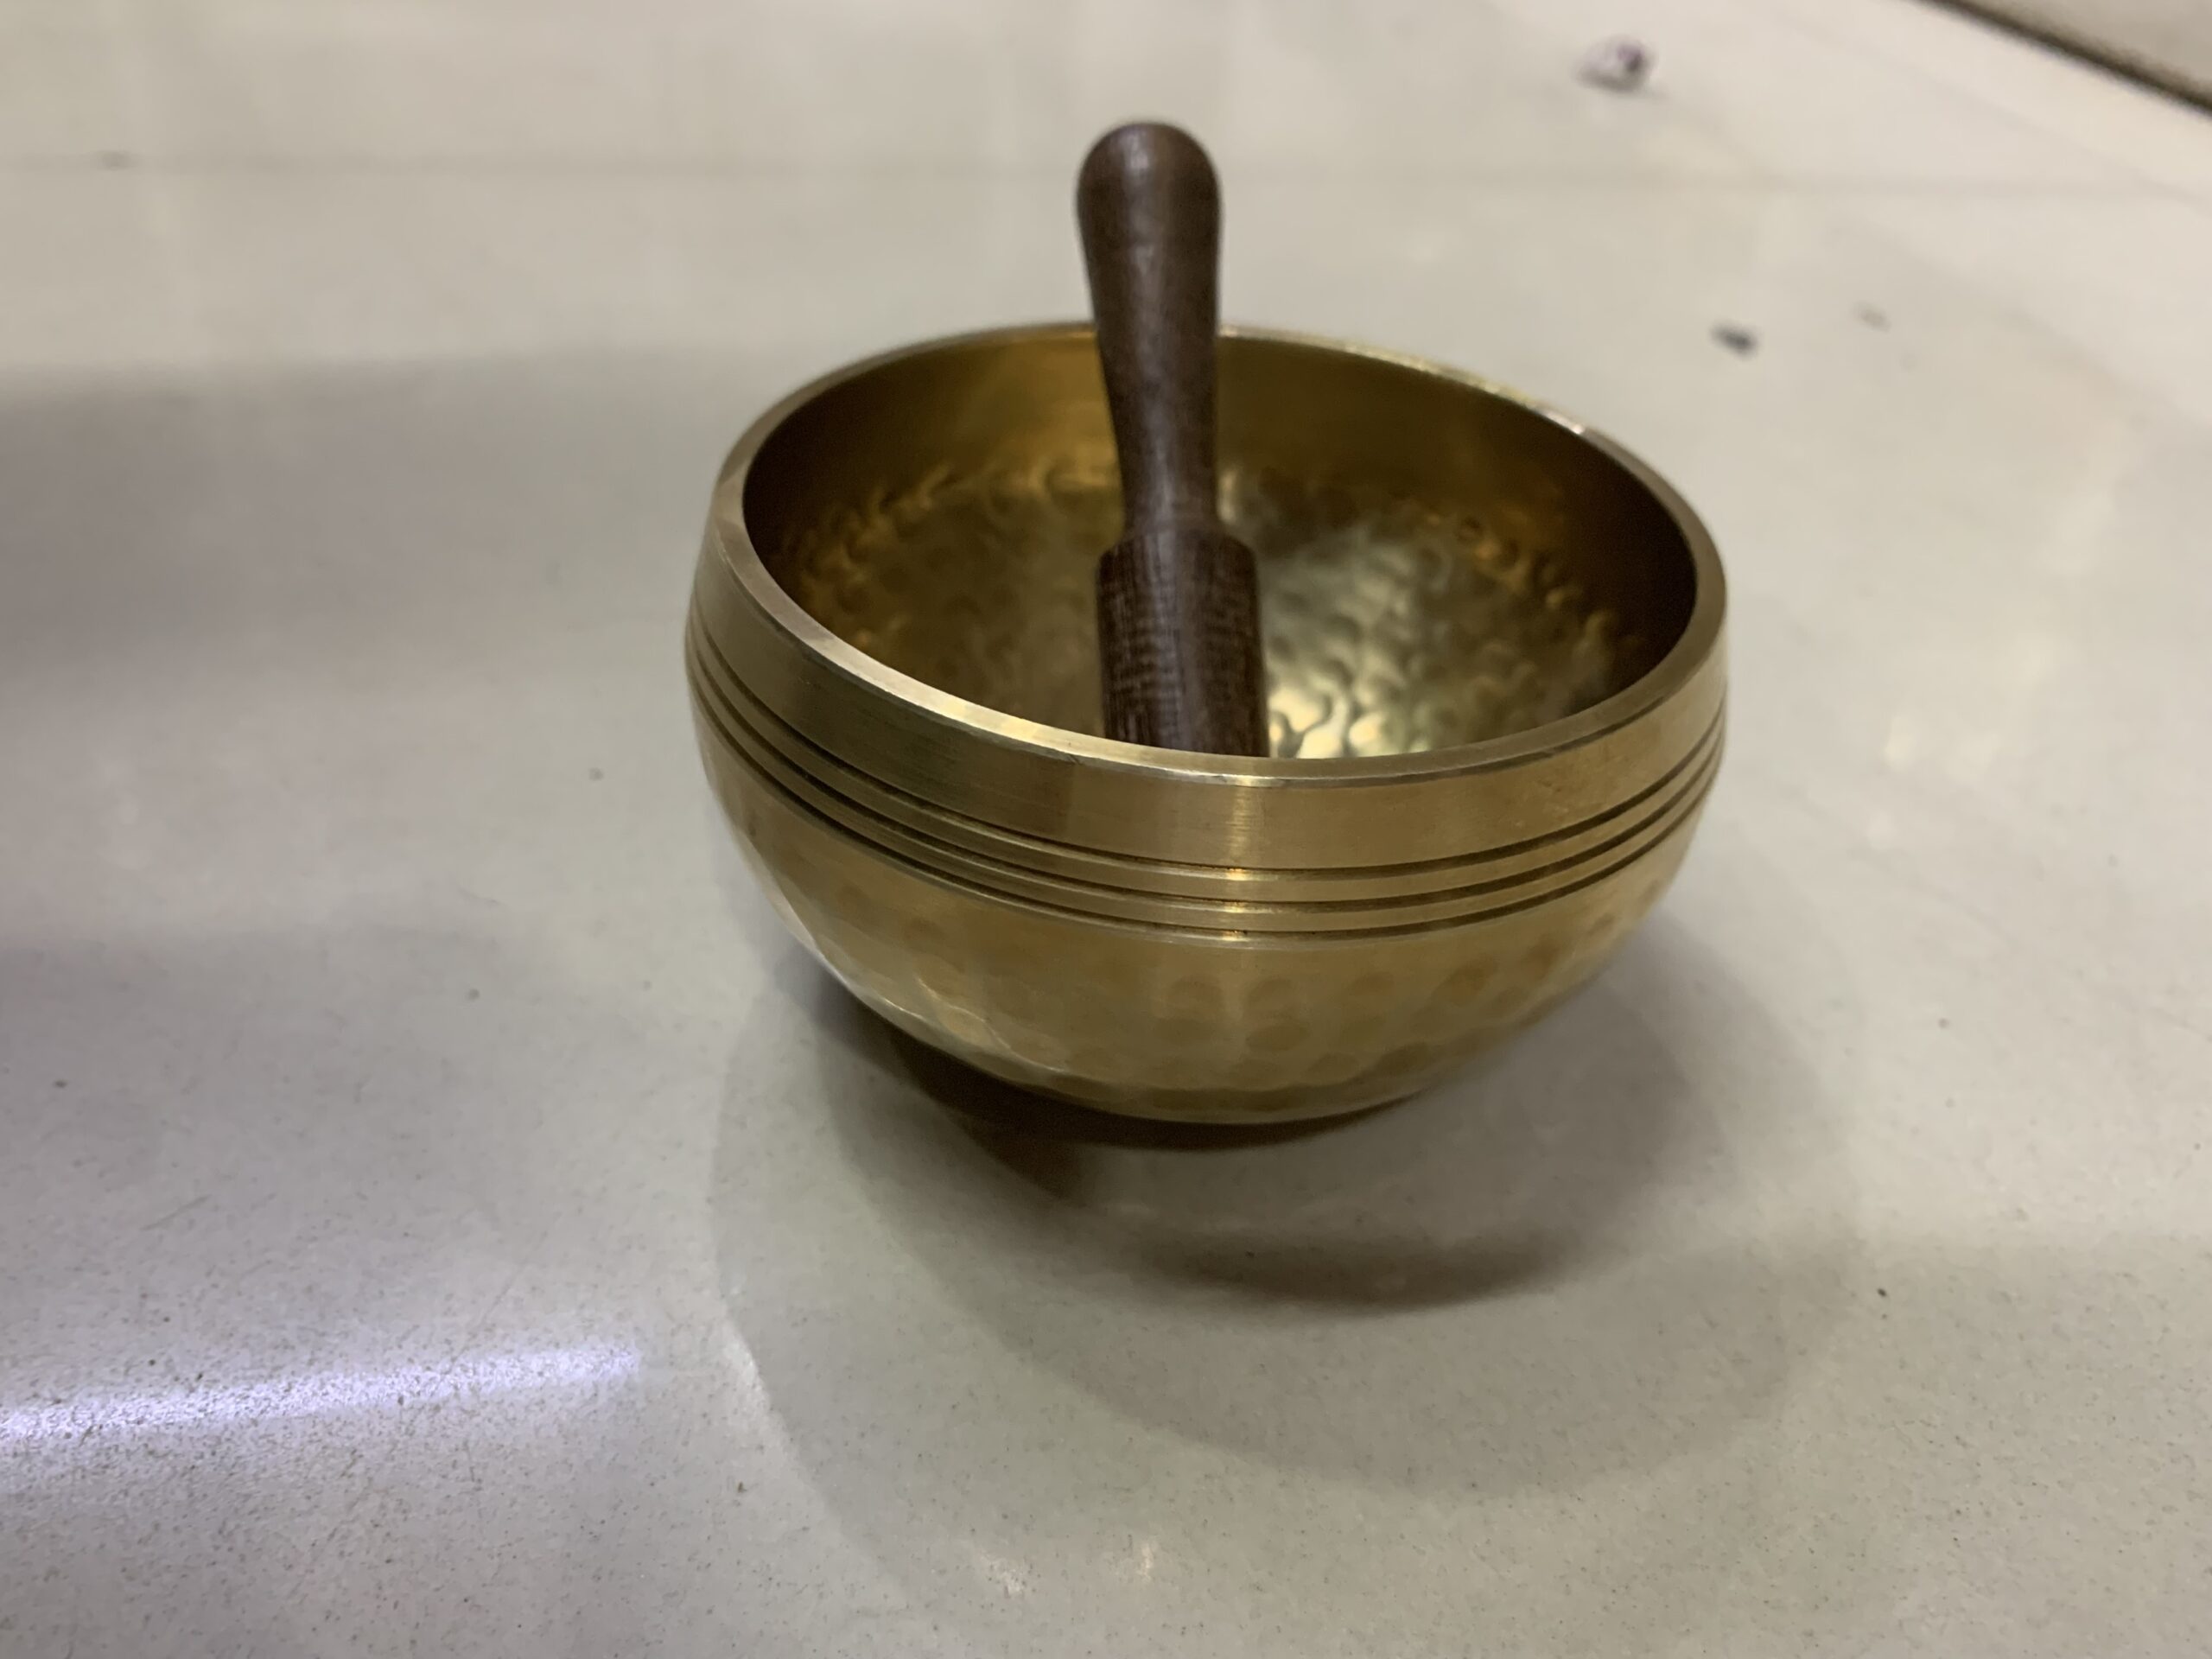 Handbeaten bowl